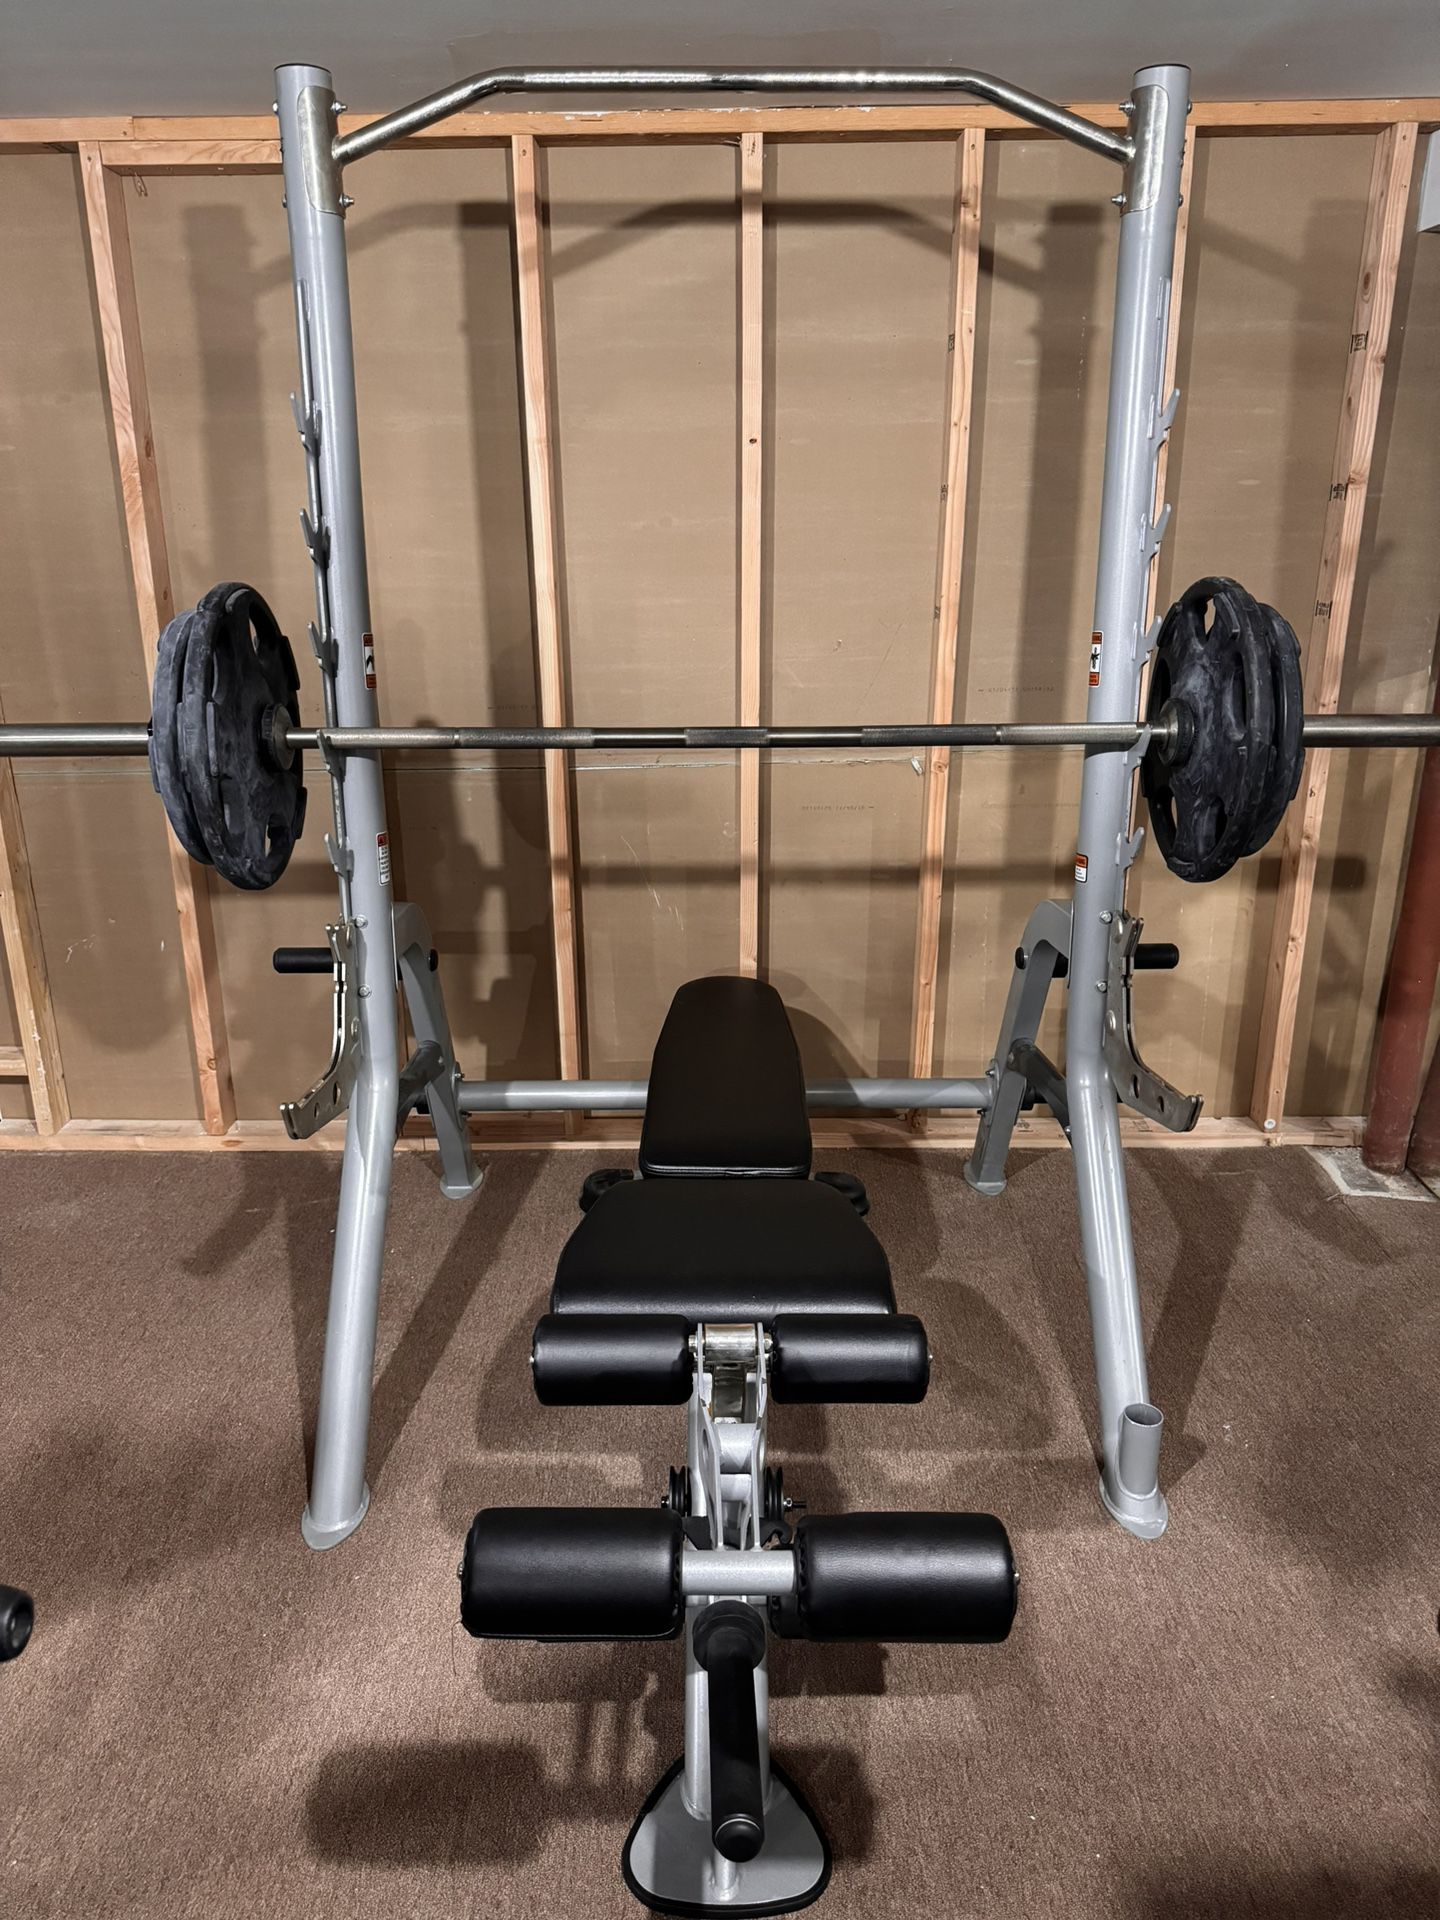 Hoist Fitness Squat Rack, Bench Gym Equipments